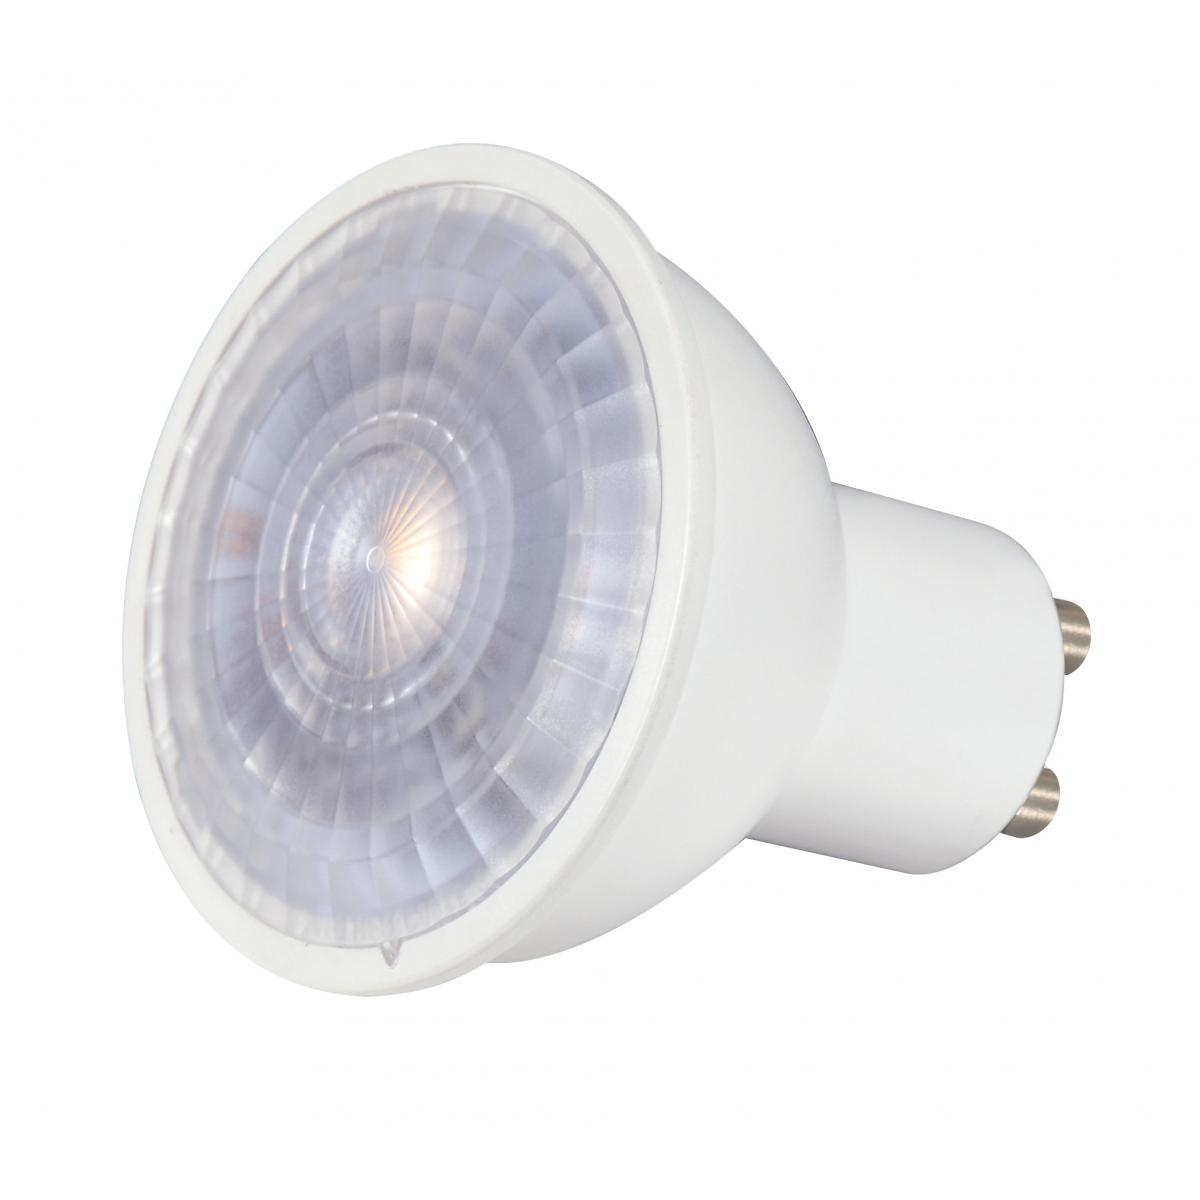 MR16 Reflector LED bulb, 7 watt, 450 Lumens, 3000K, GU10 Base, 40 Deg. Flood